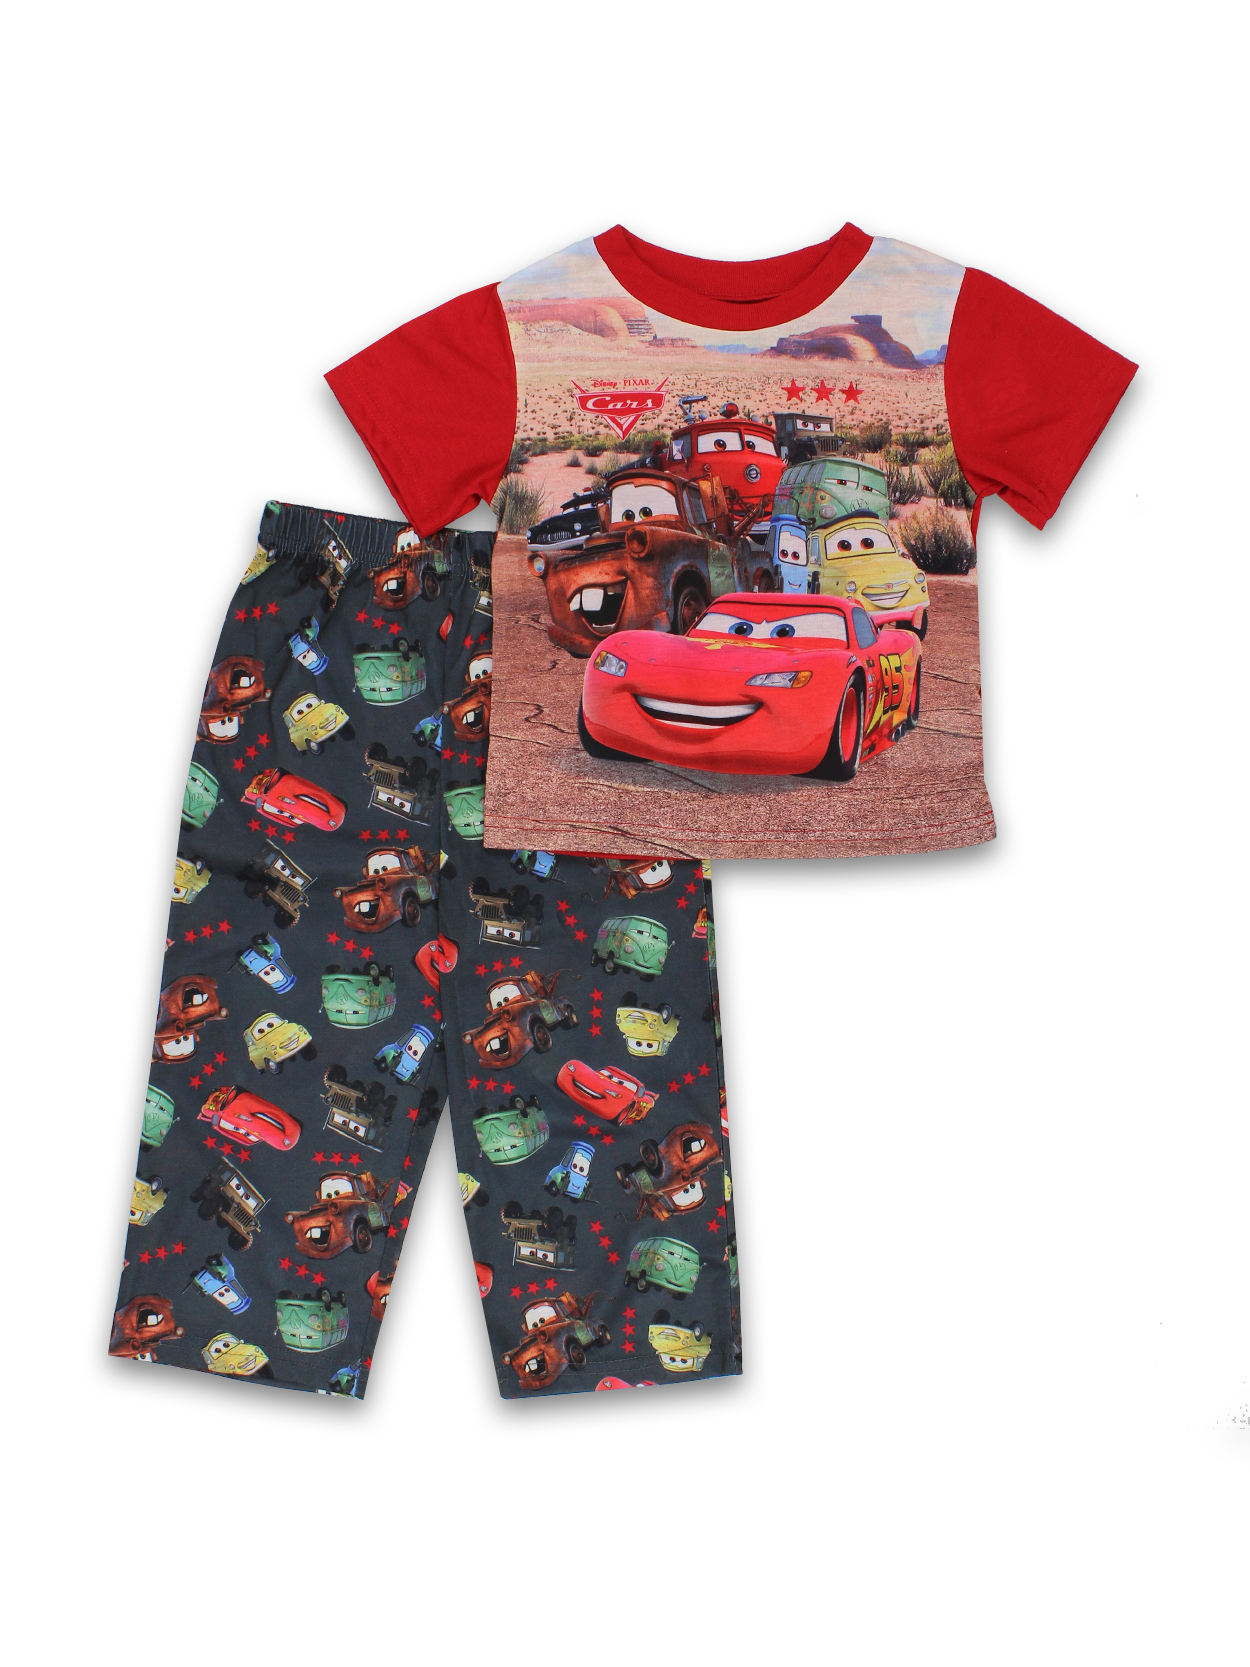 Disney Cars Lightning Mcqueen 2 PC Shirt Pants Outfit Set Boy Size 5T